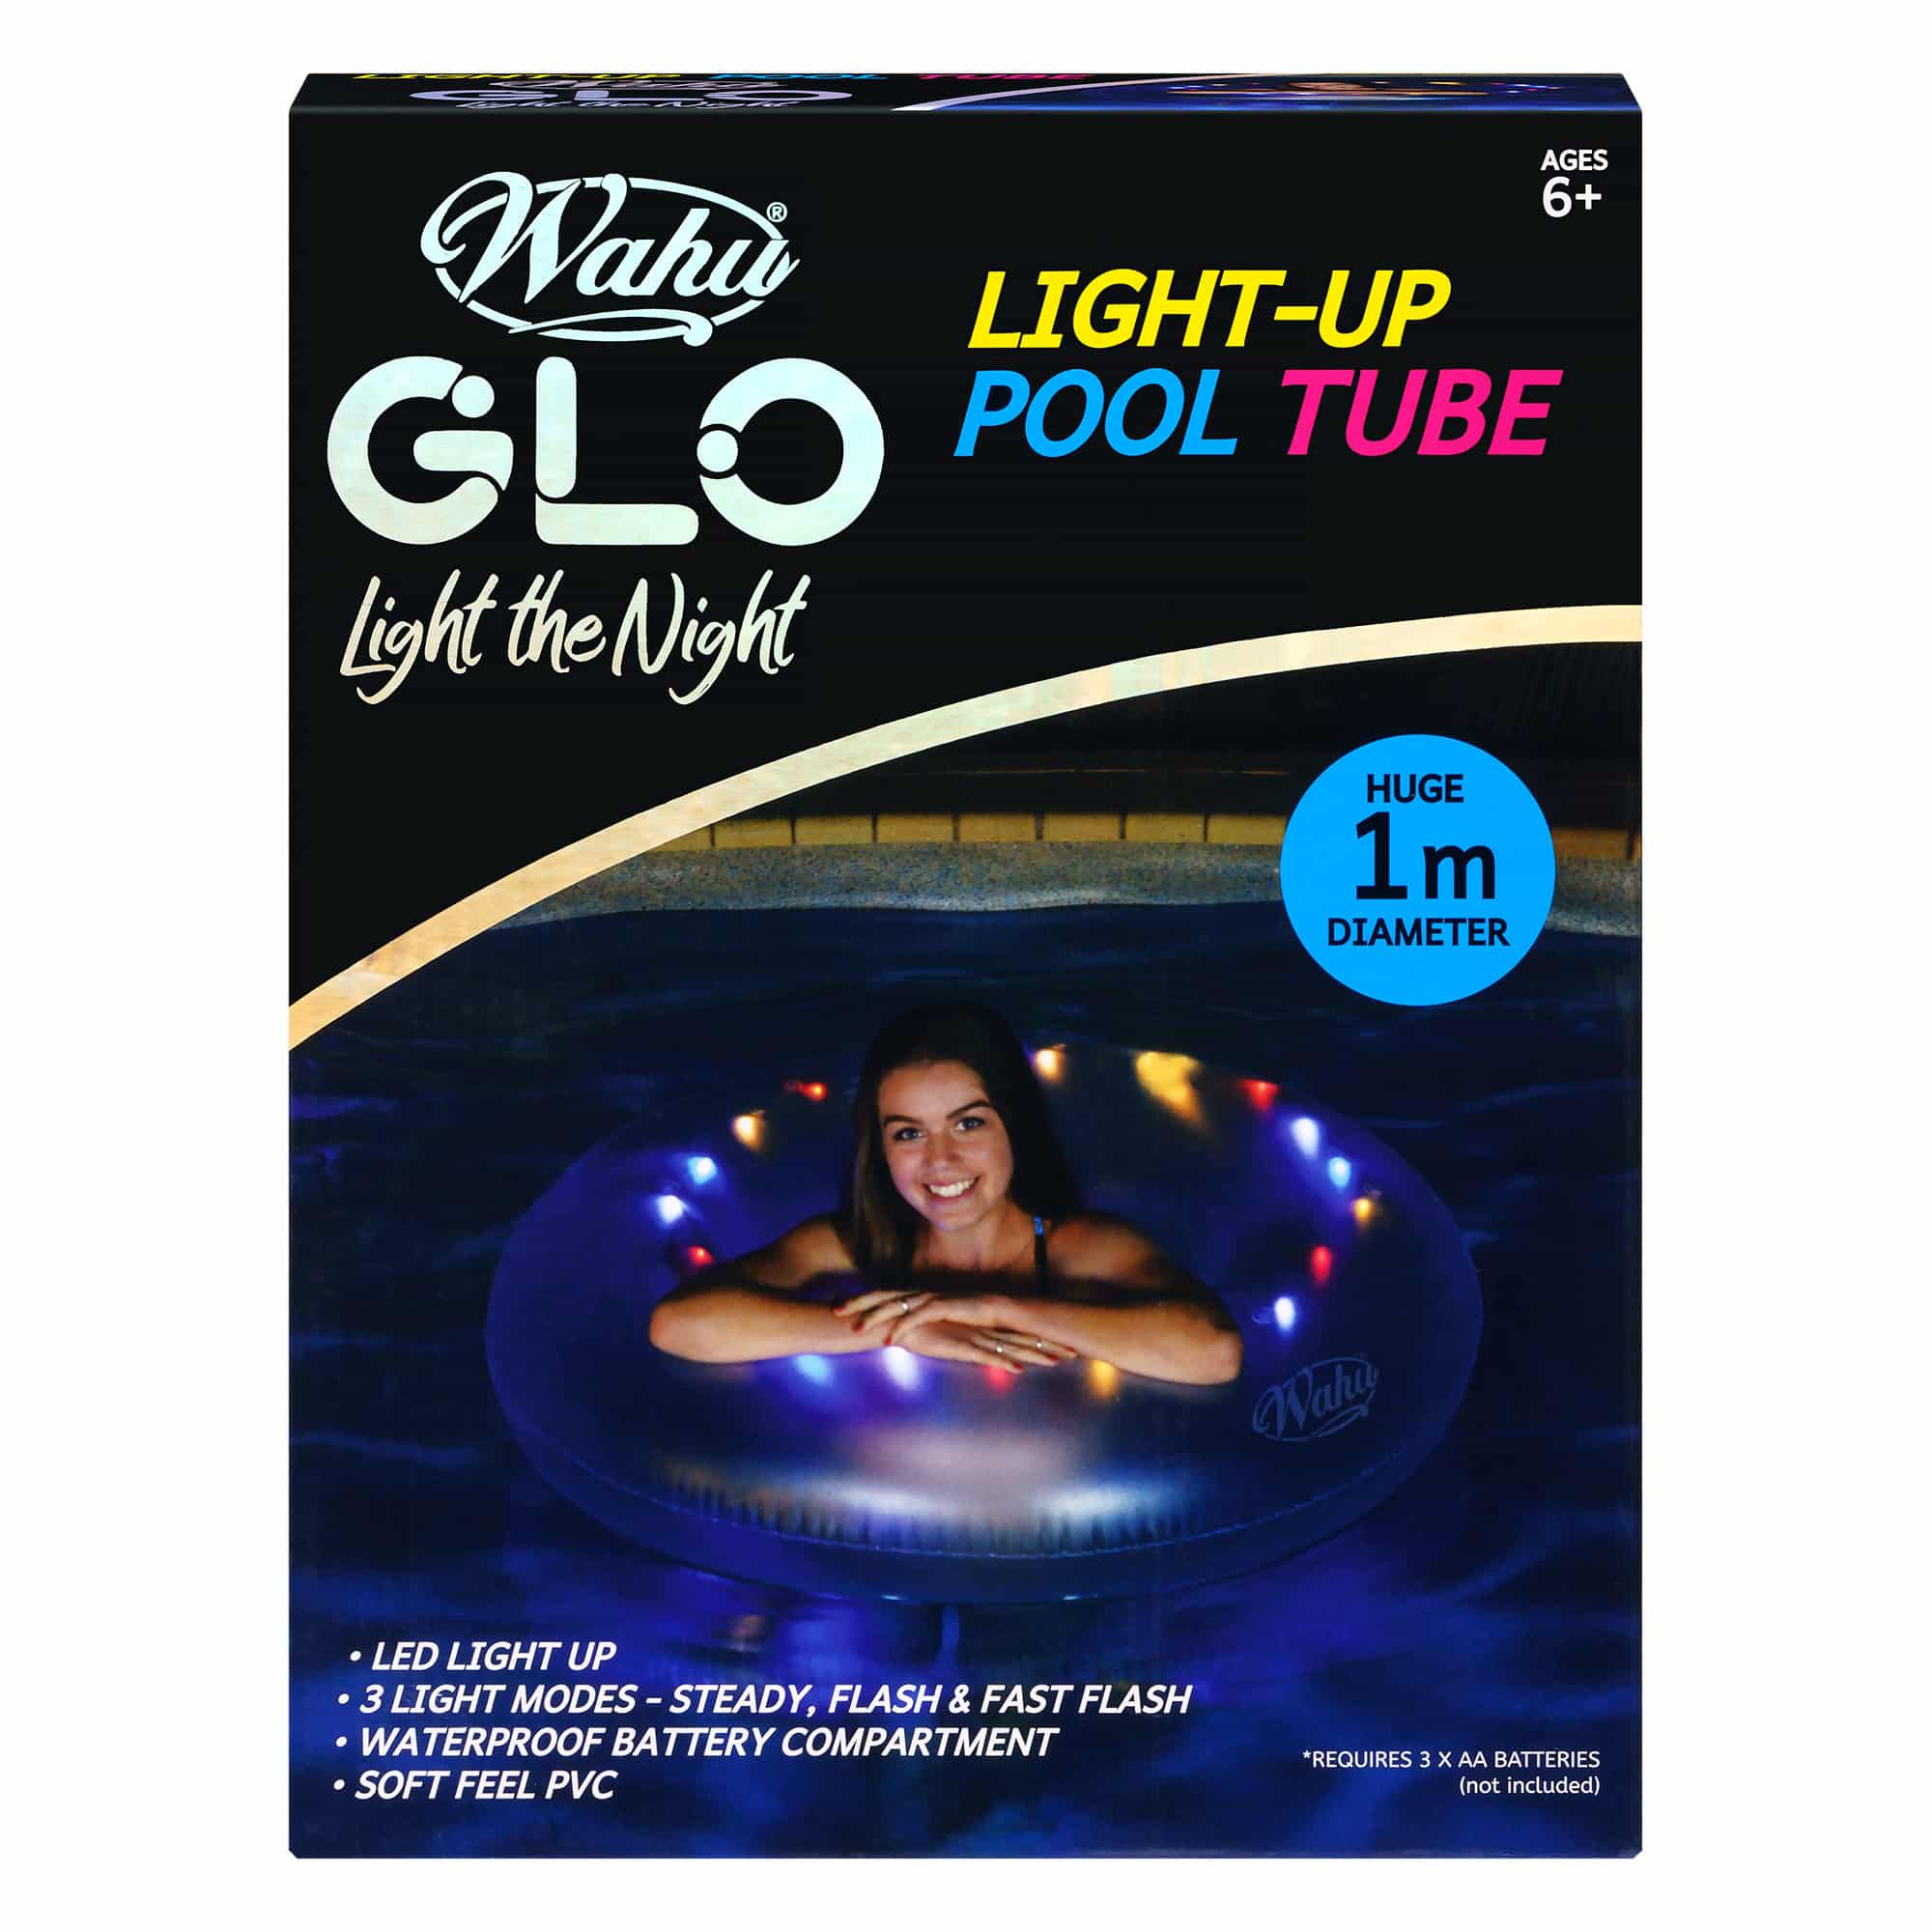 Wahu Glo - Light-Up Pool Tube